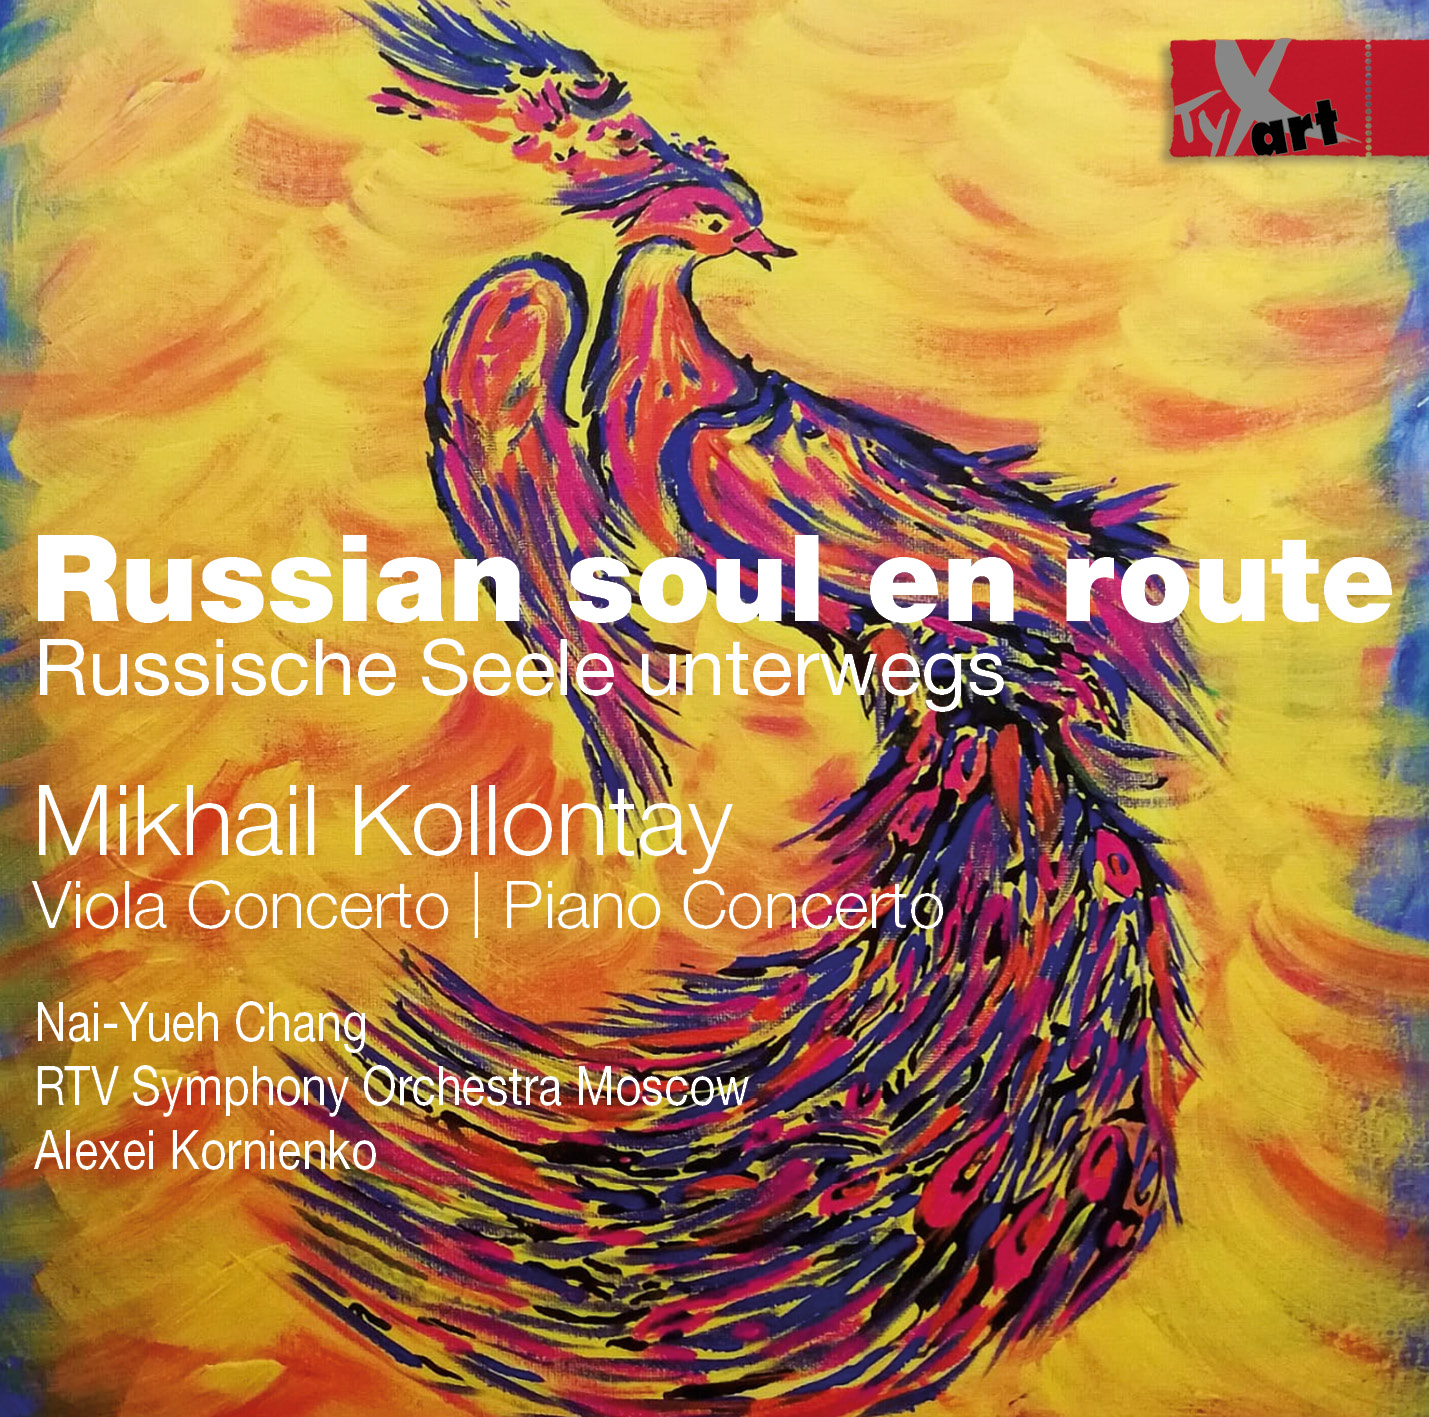 Mikhail Kollontay - Viola and Piano Concerto